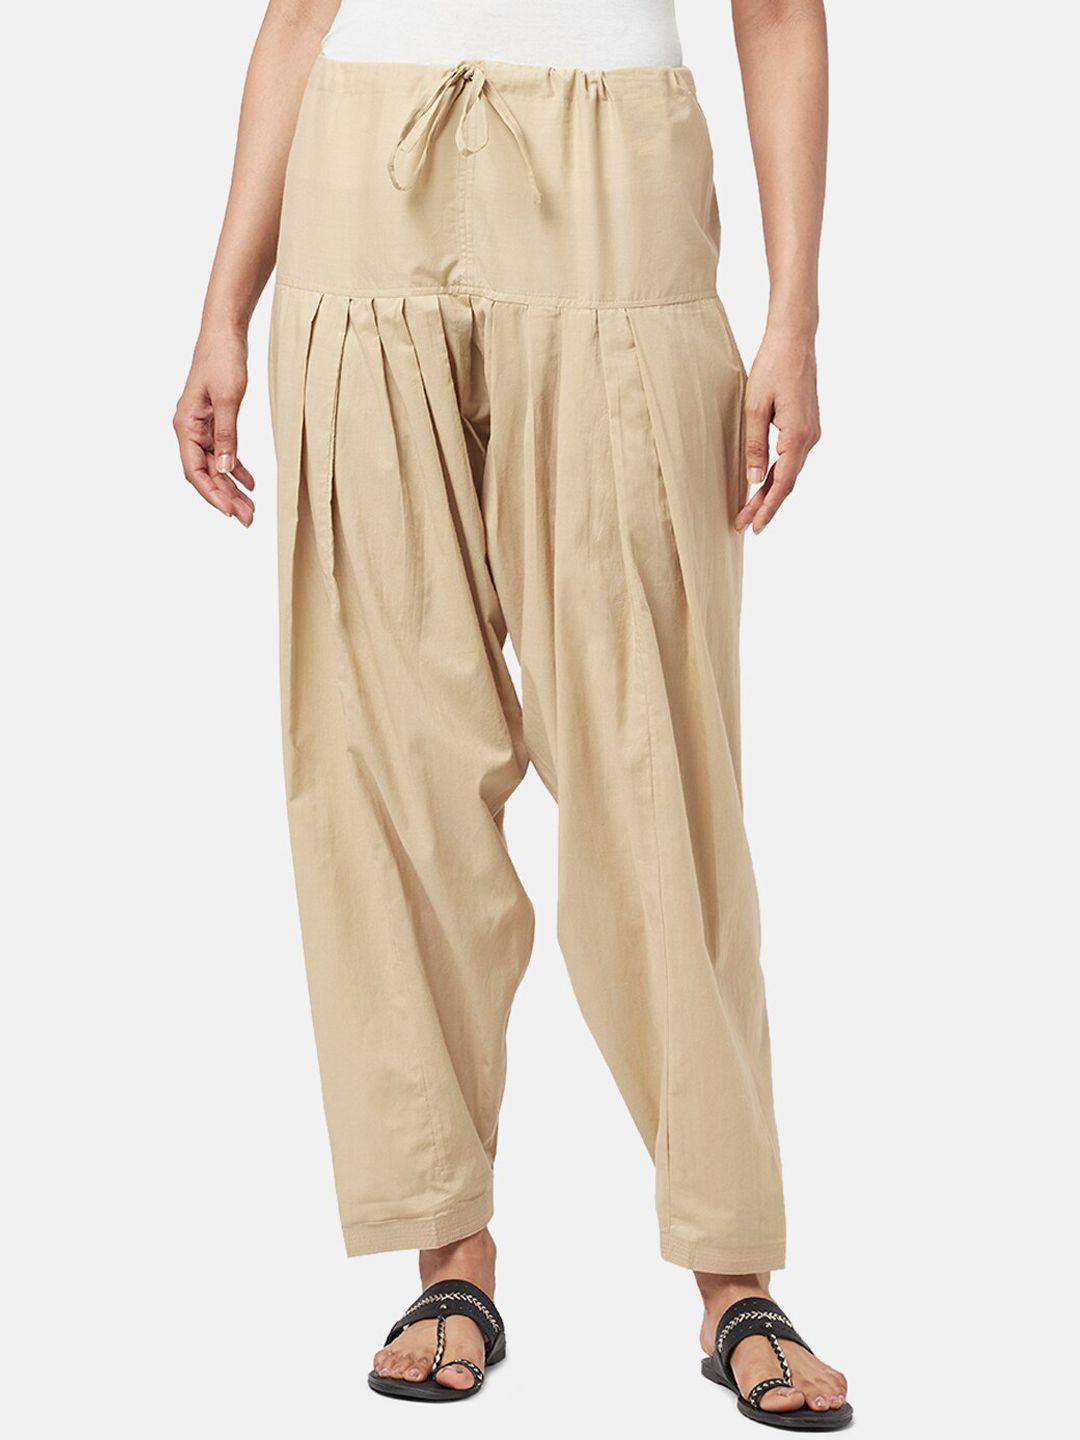 rangmanch by pantaloons women loose fit cotton salwar